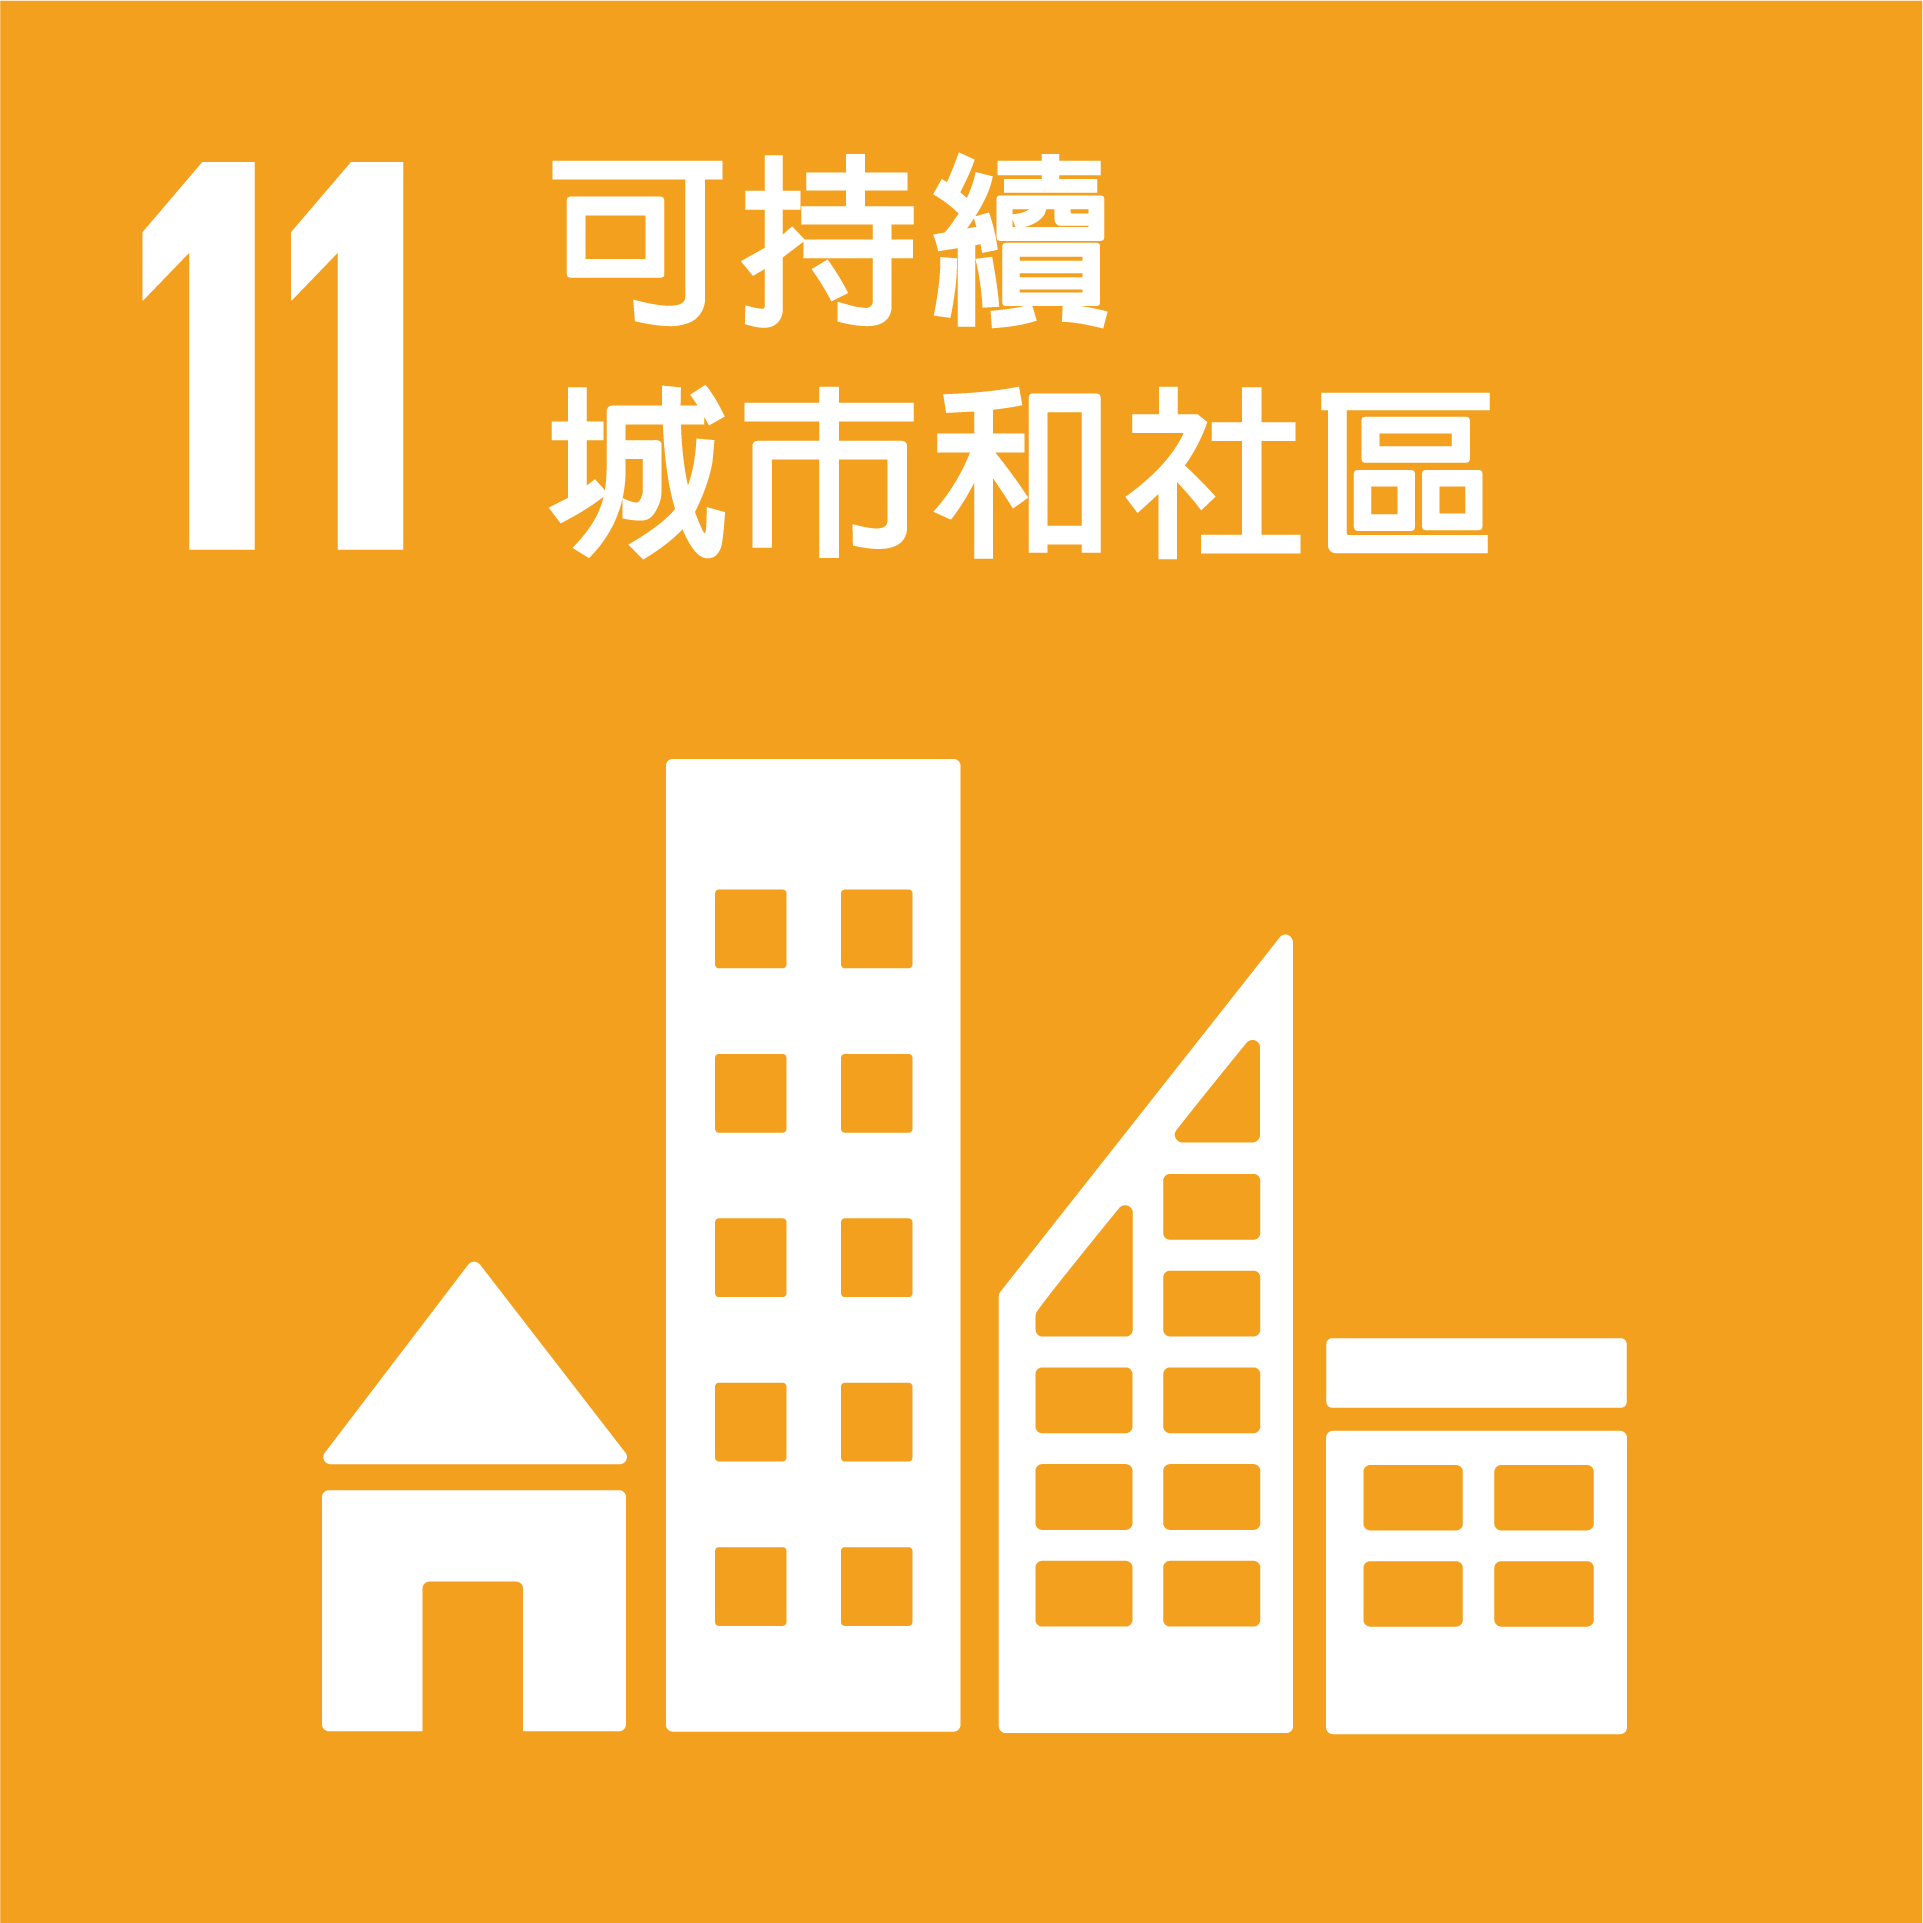 SDG vertical logo icons Chi 11